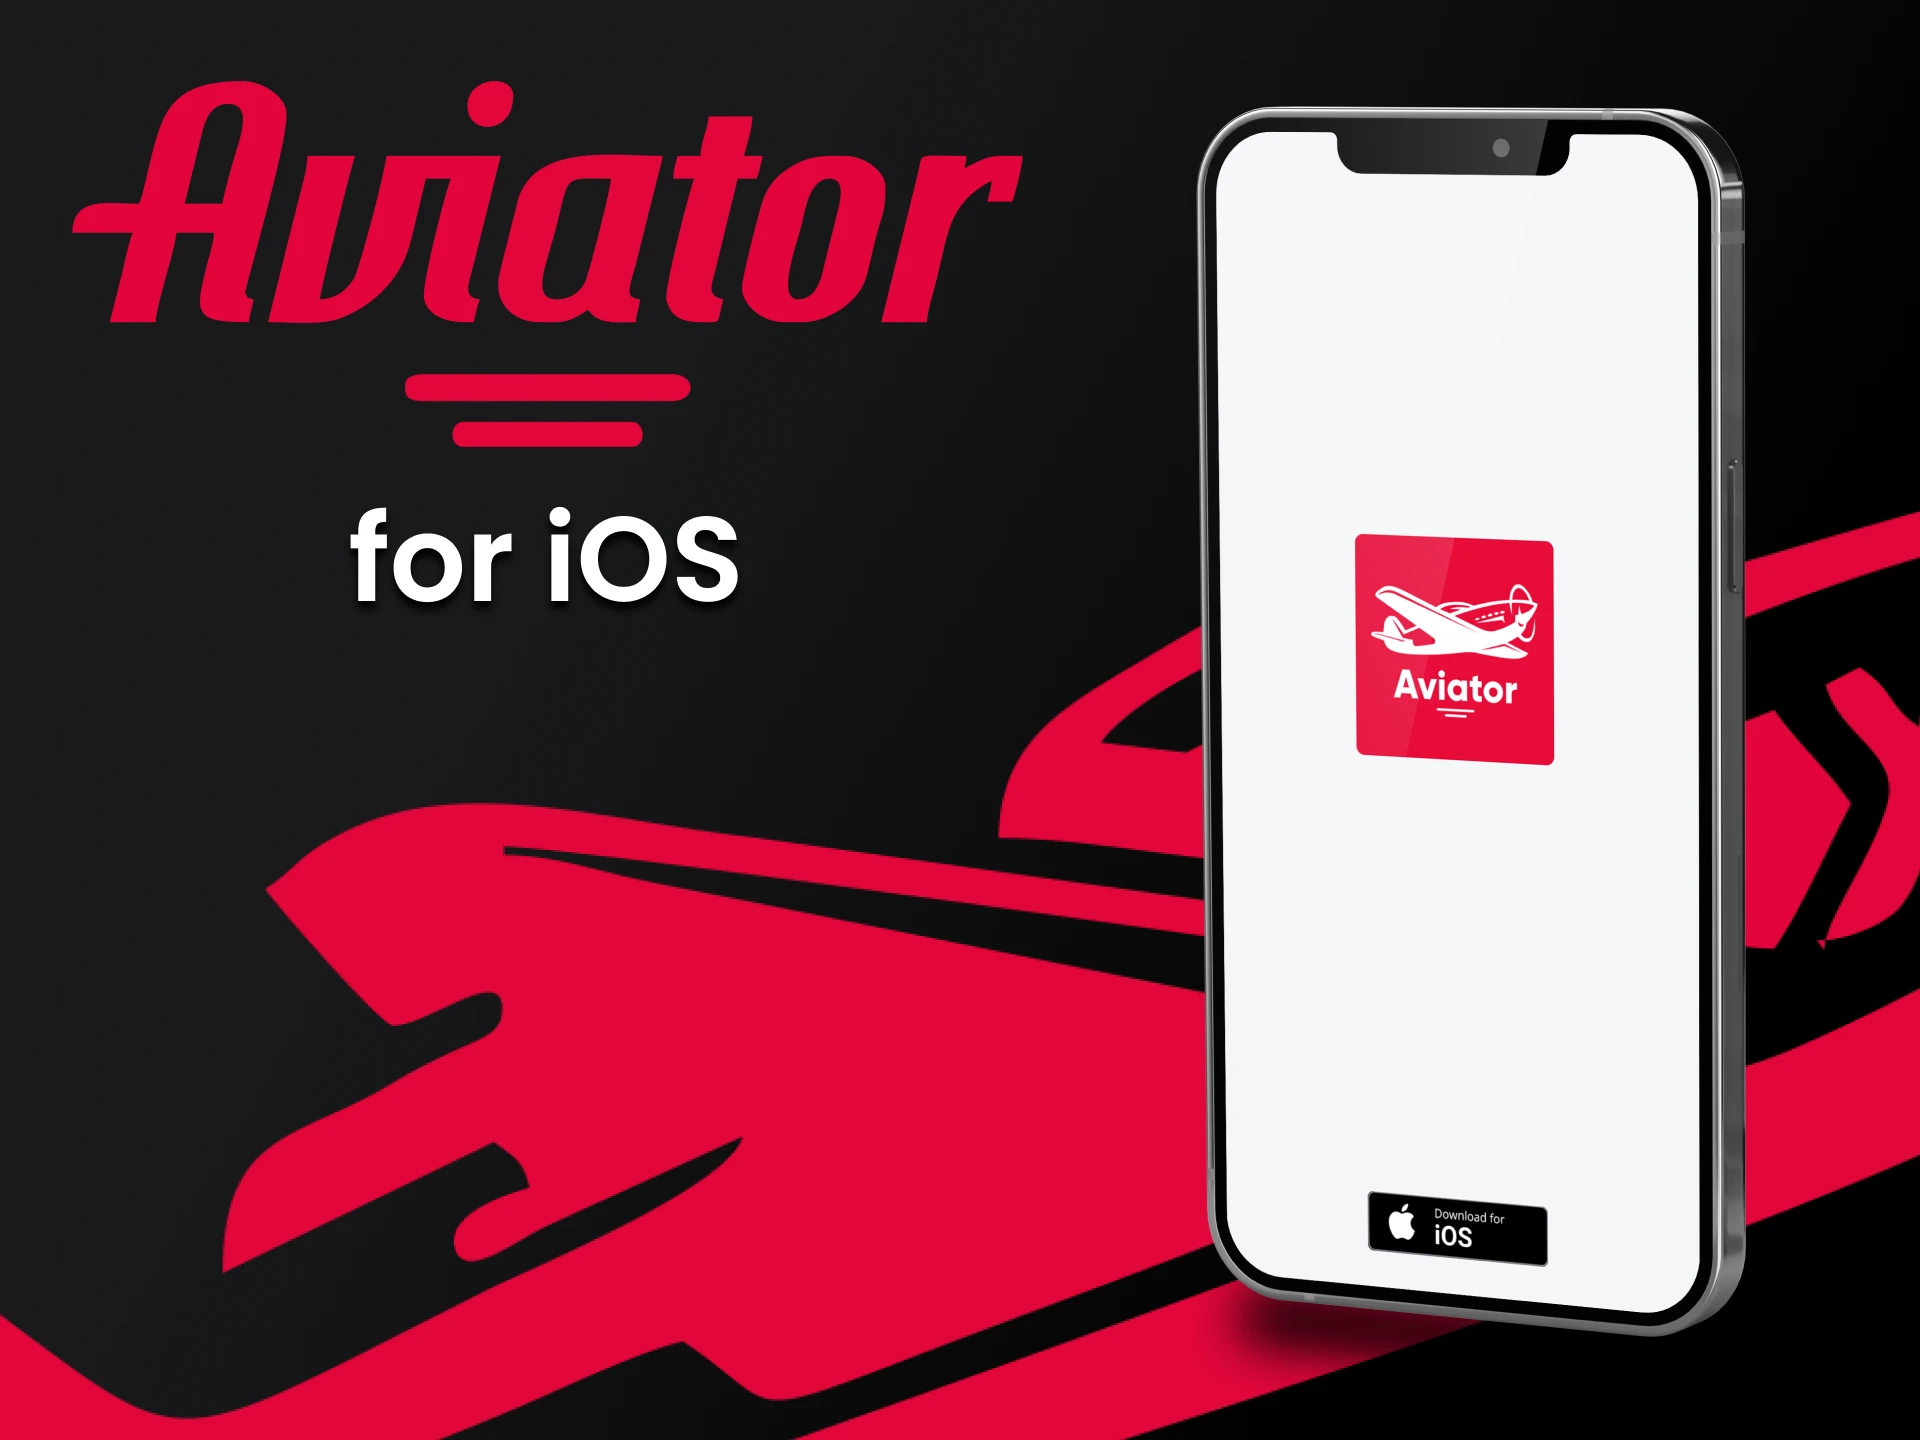 Play Aviator on ios devices.